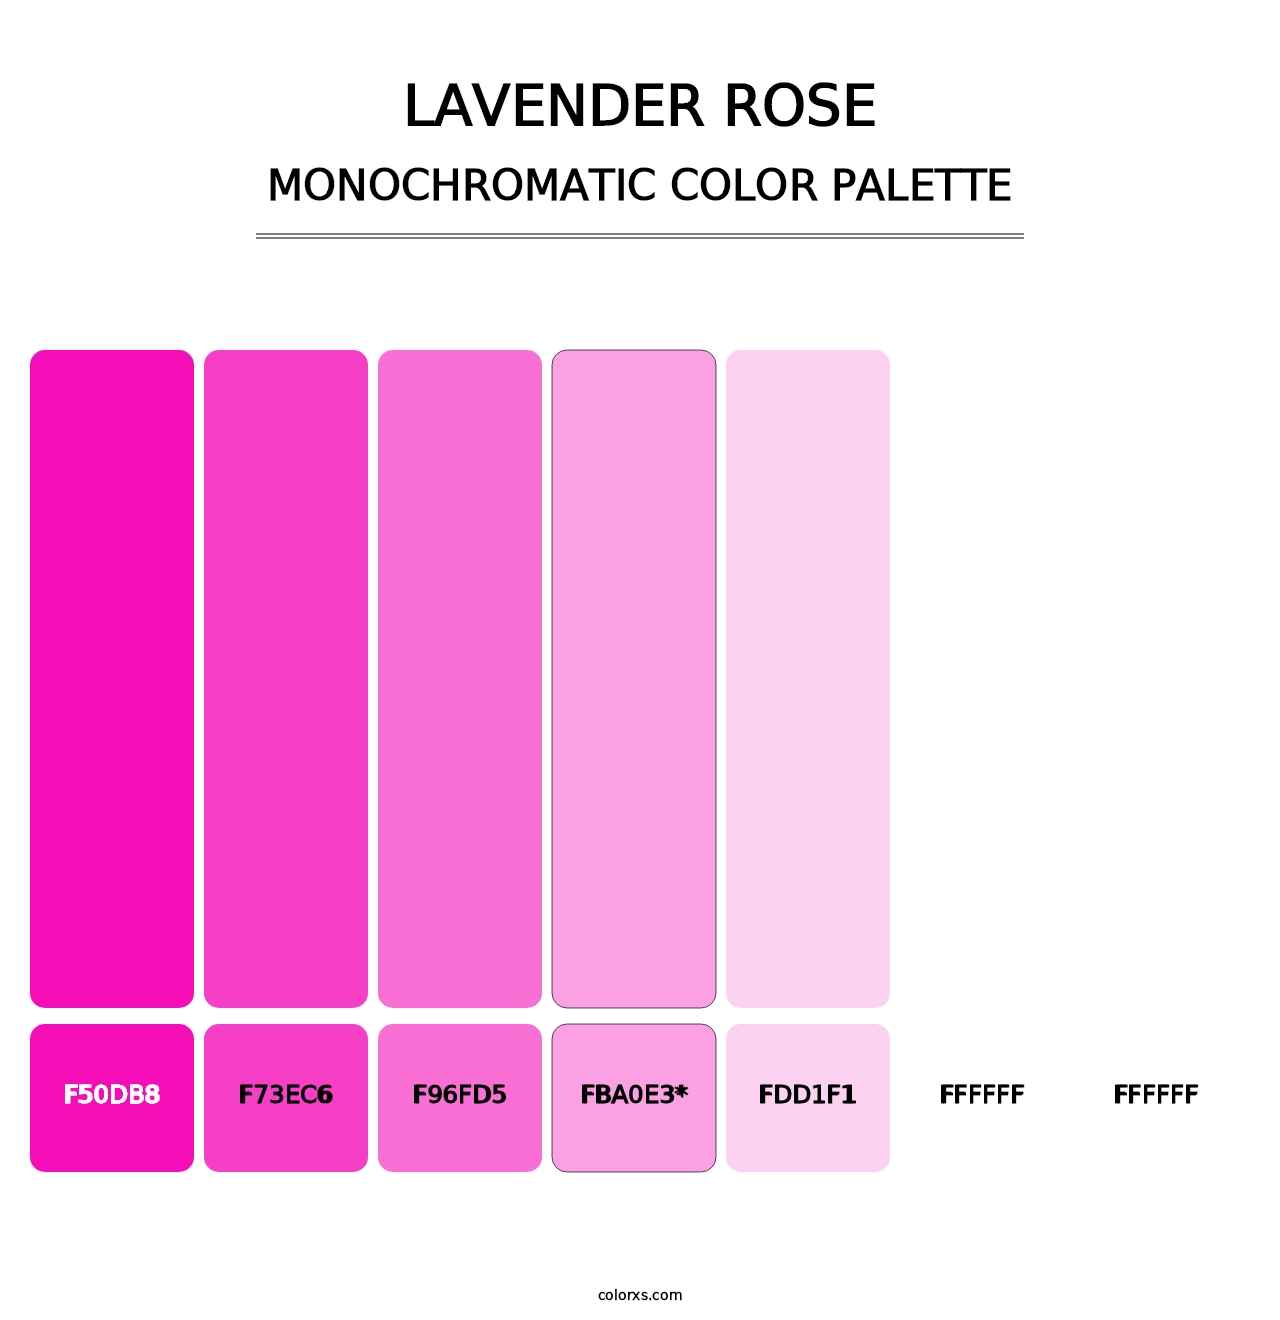 Lavender Rose - Monochromatic Color Palette